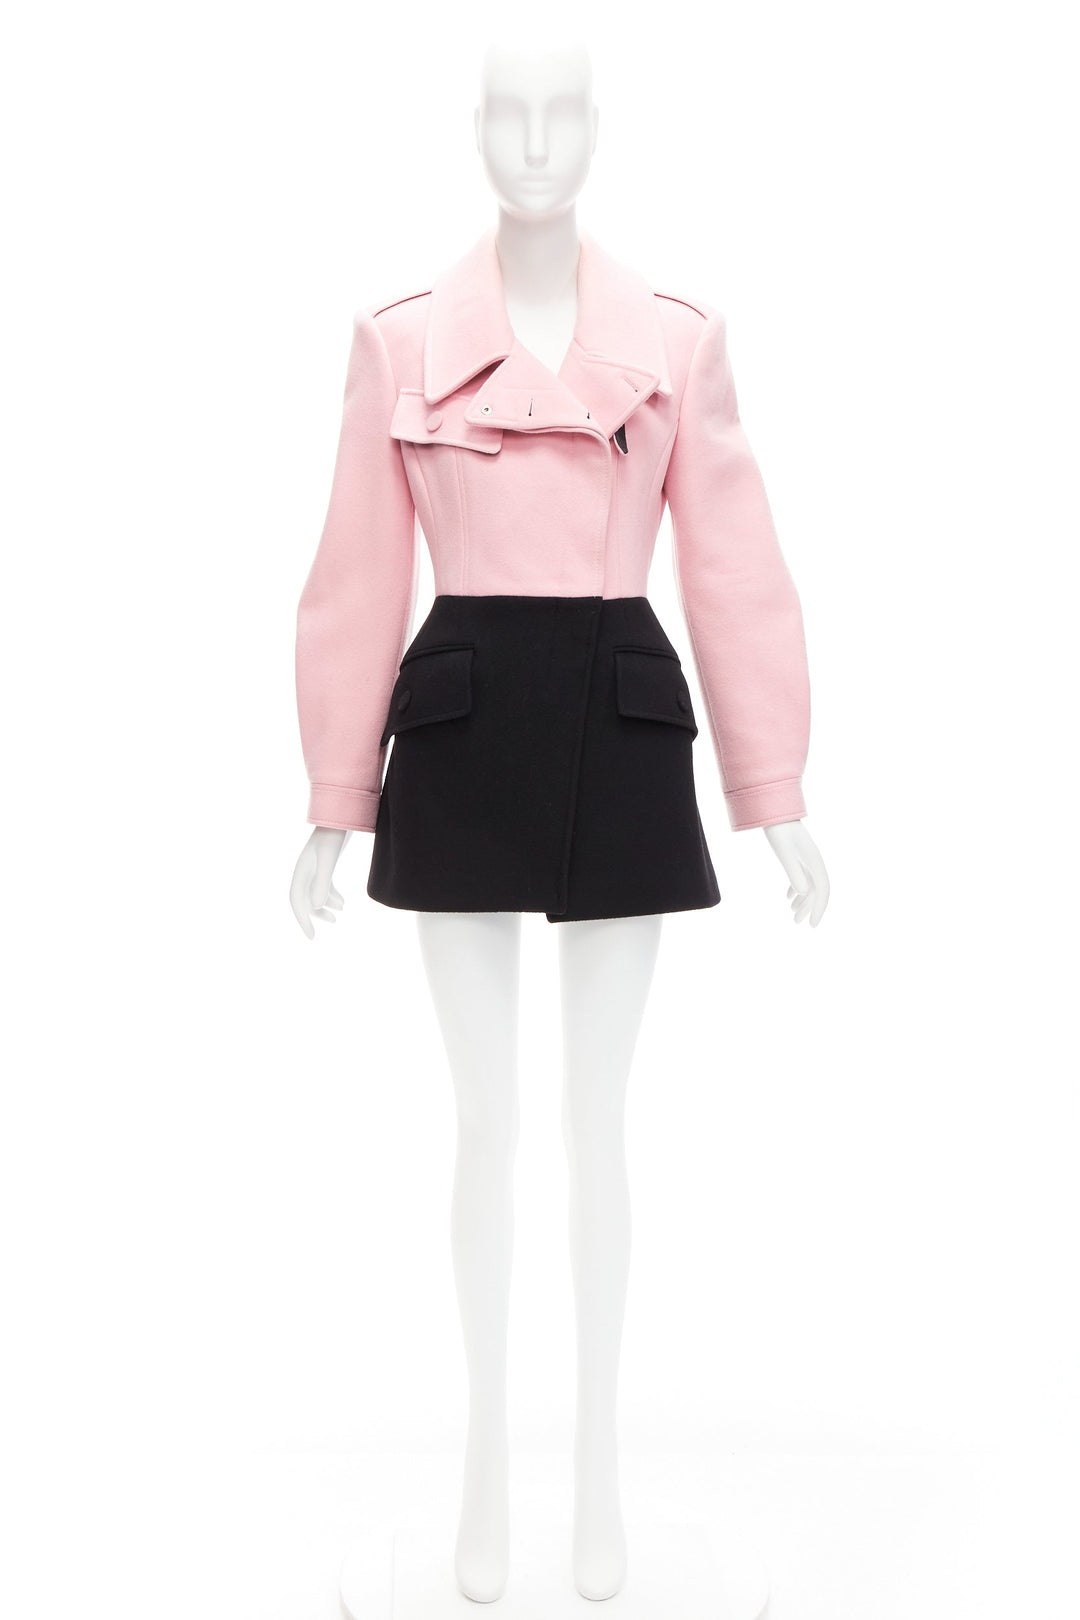 ALEXANDER MCQUEEN 2019 virgin wool black pink utility pocketed jacket IT42 M